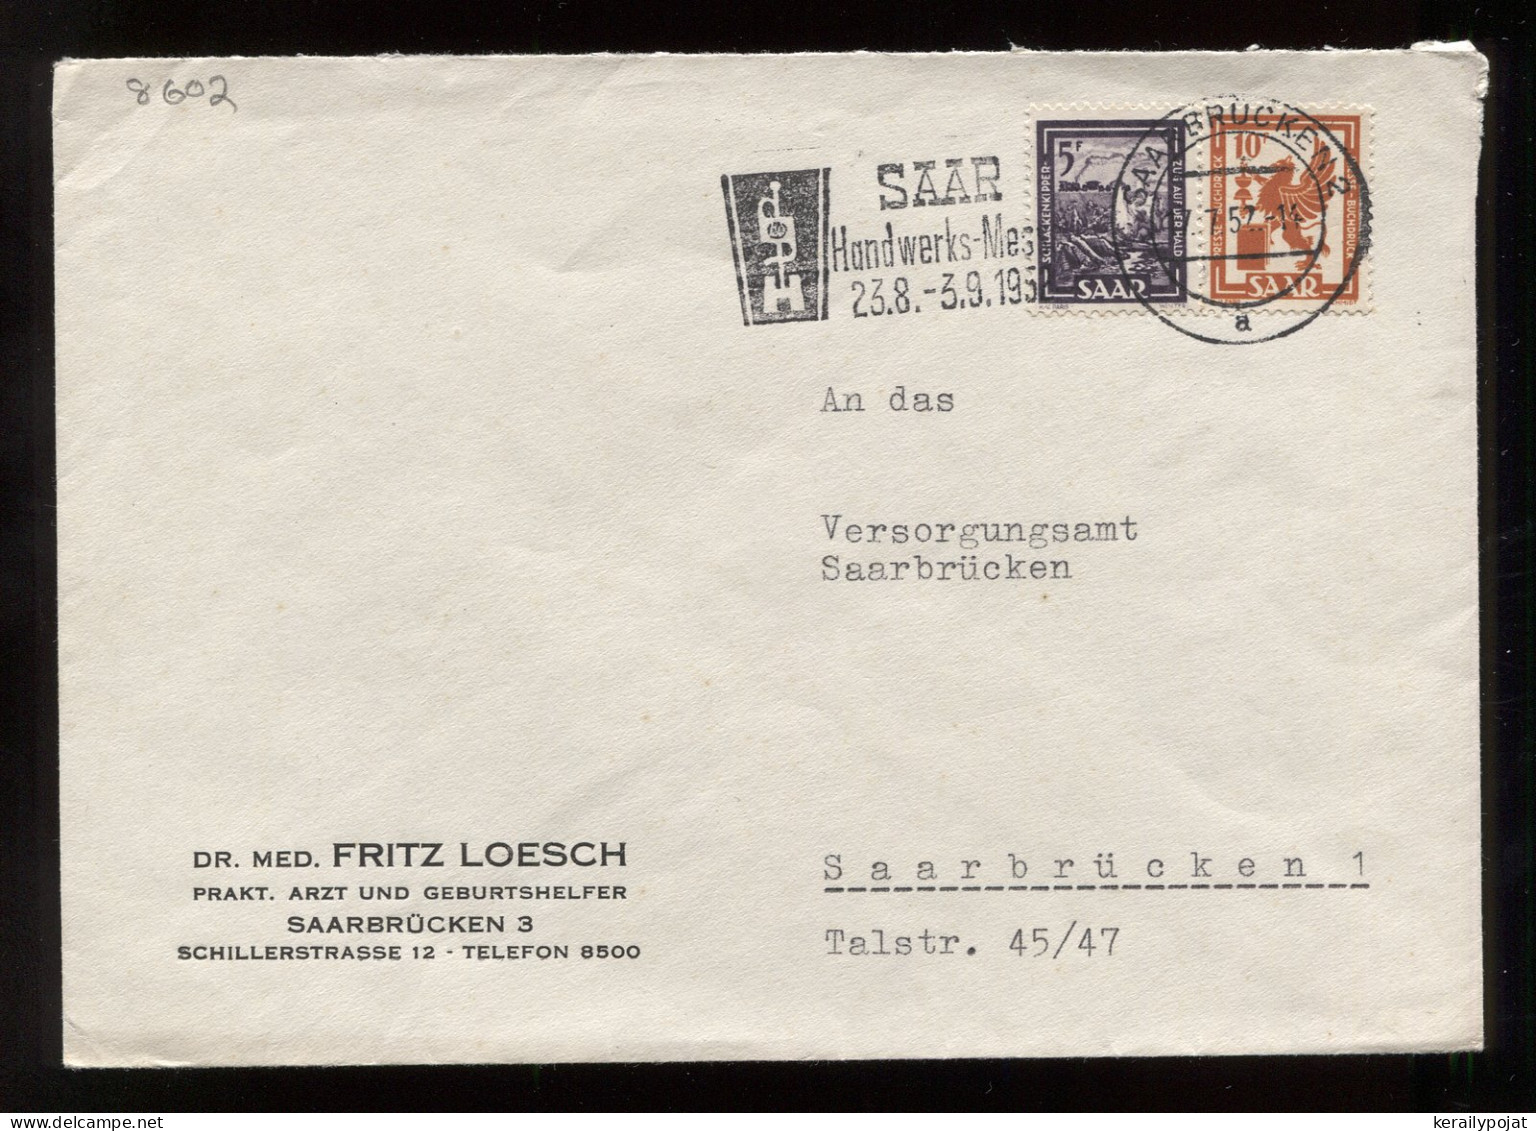 Saar 1957 Saarbrucken 2 Slogan Cancellation Cover__(8602) - Lettres & Documents